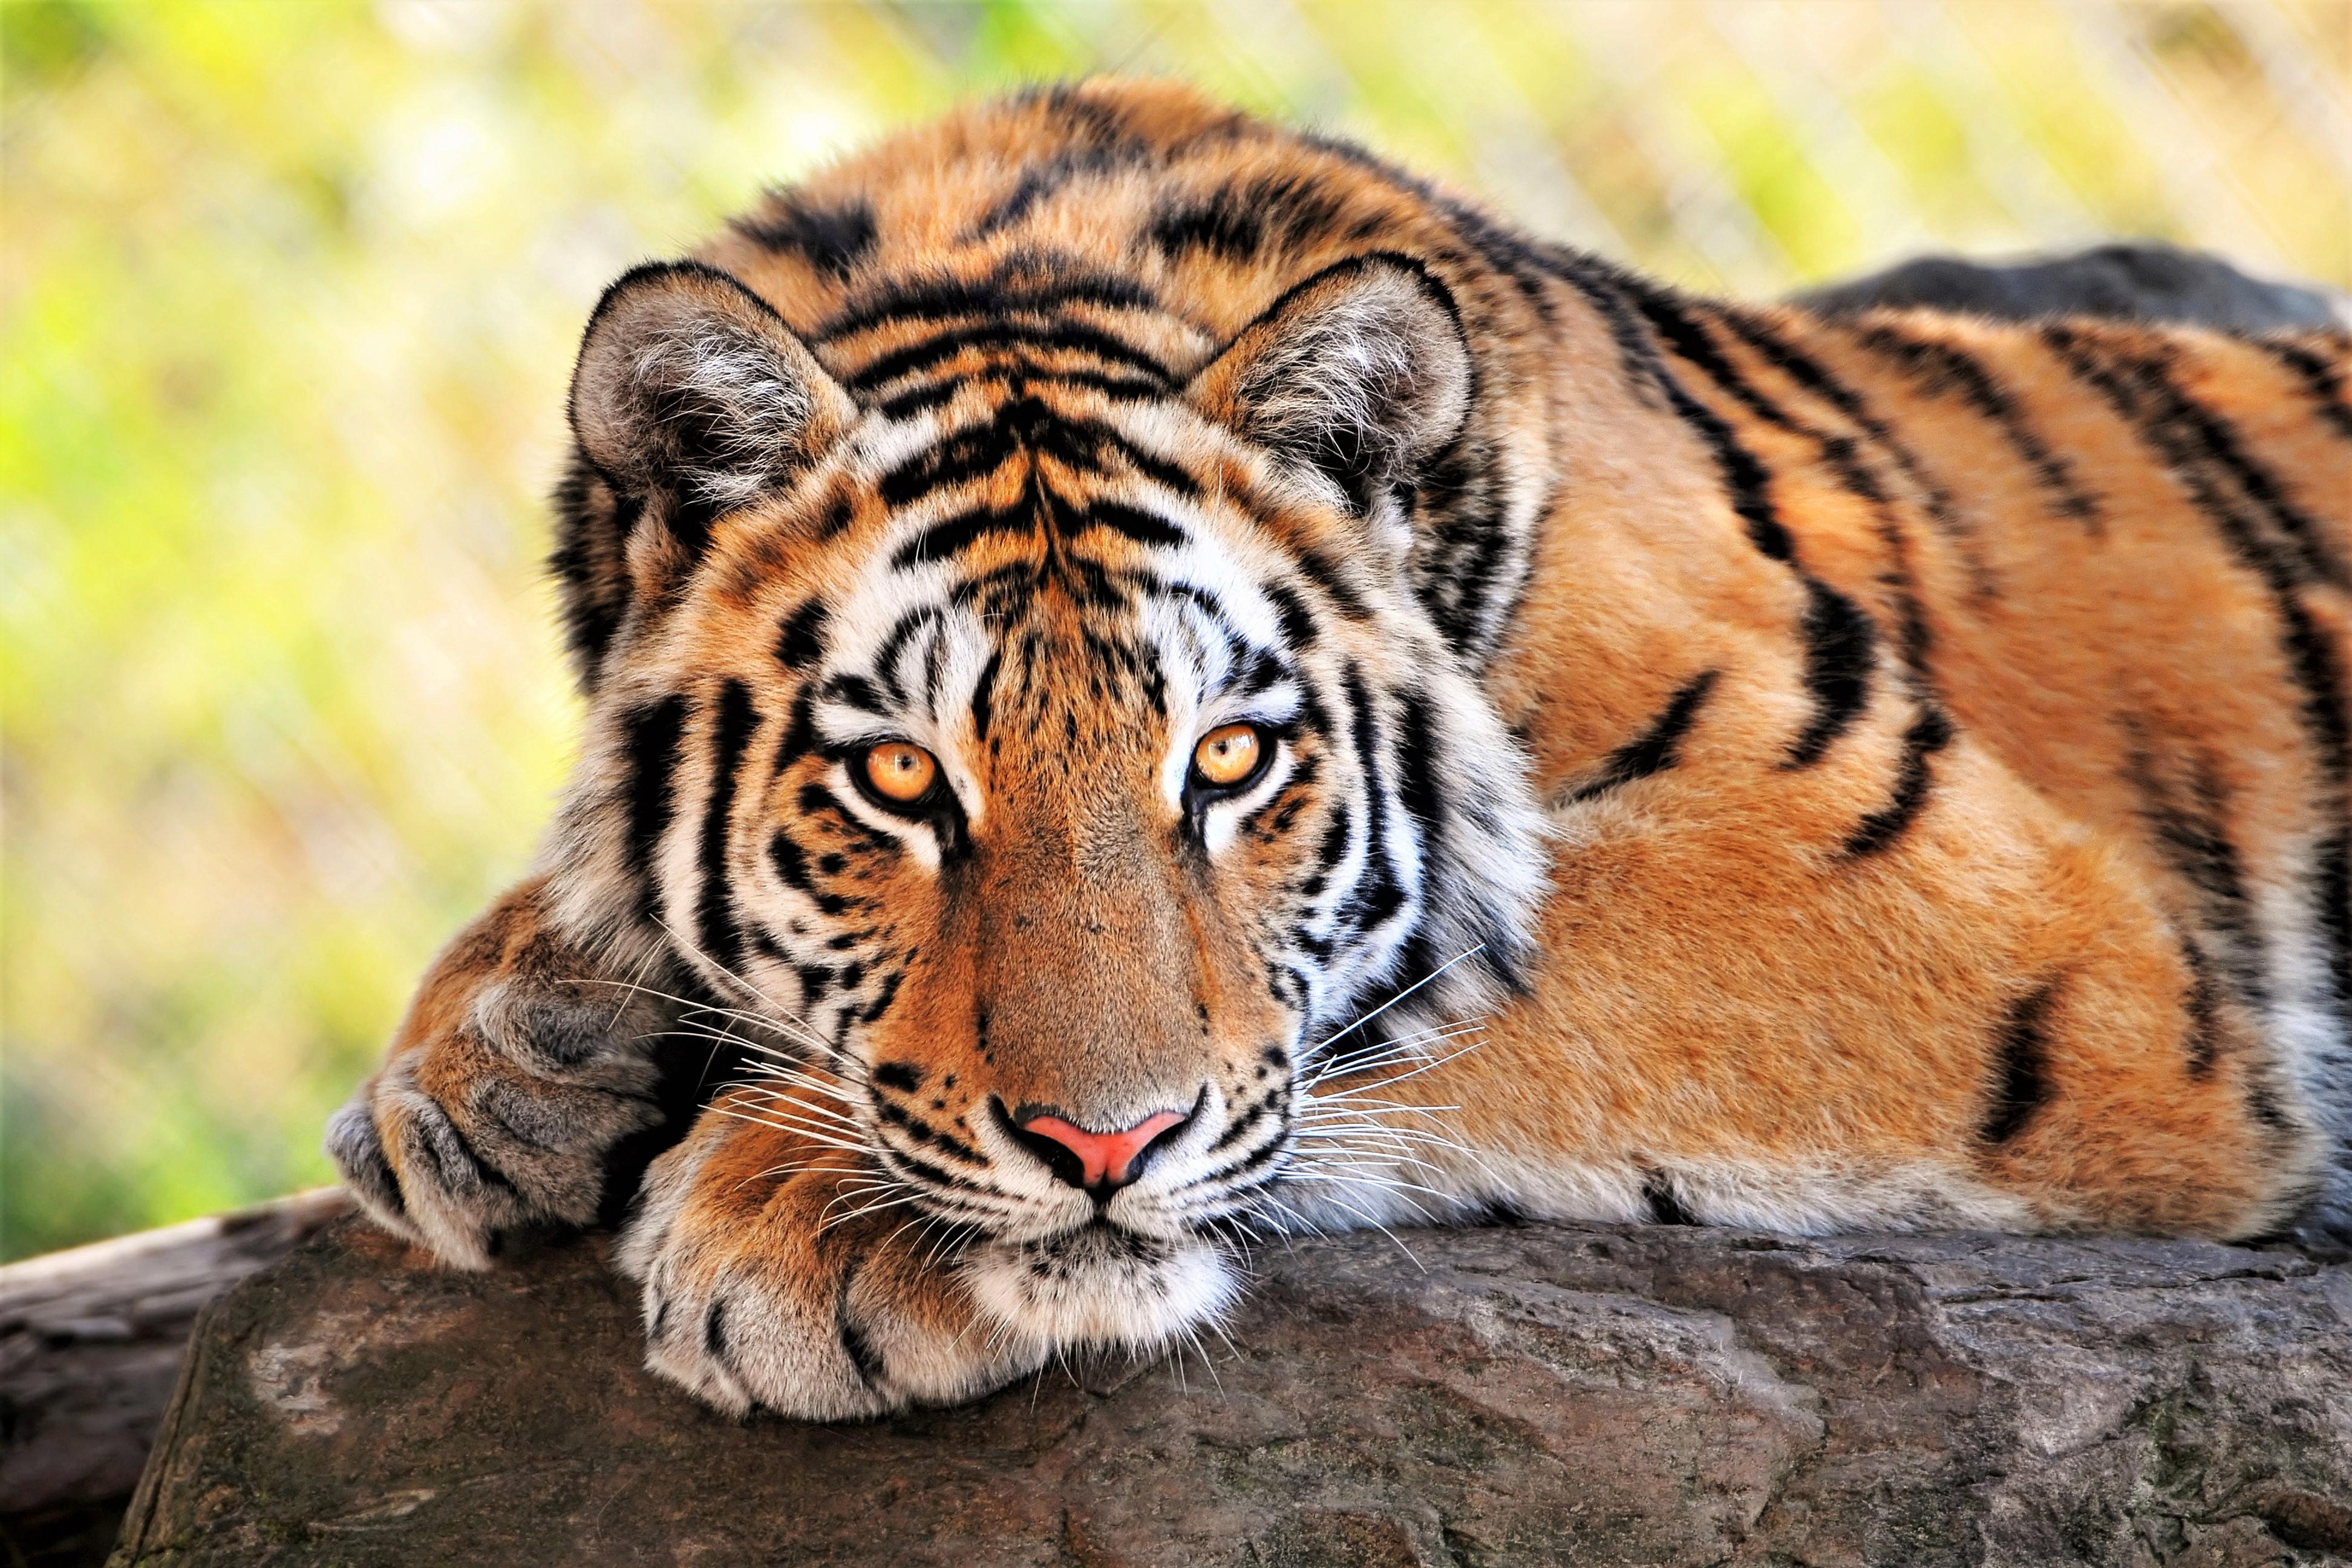 Beautiful Tiger 4k Ultra HD Wallpaper. Background Image